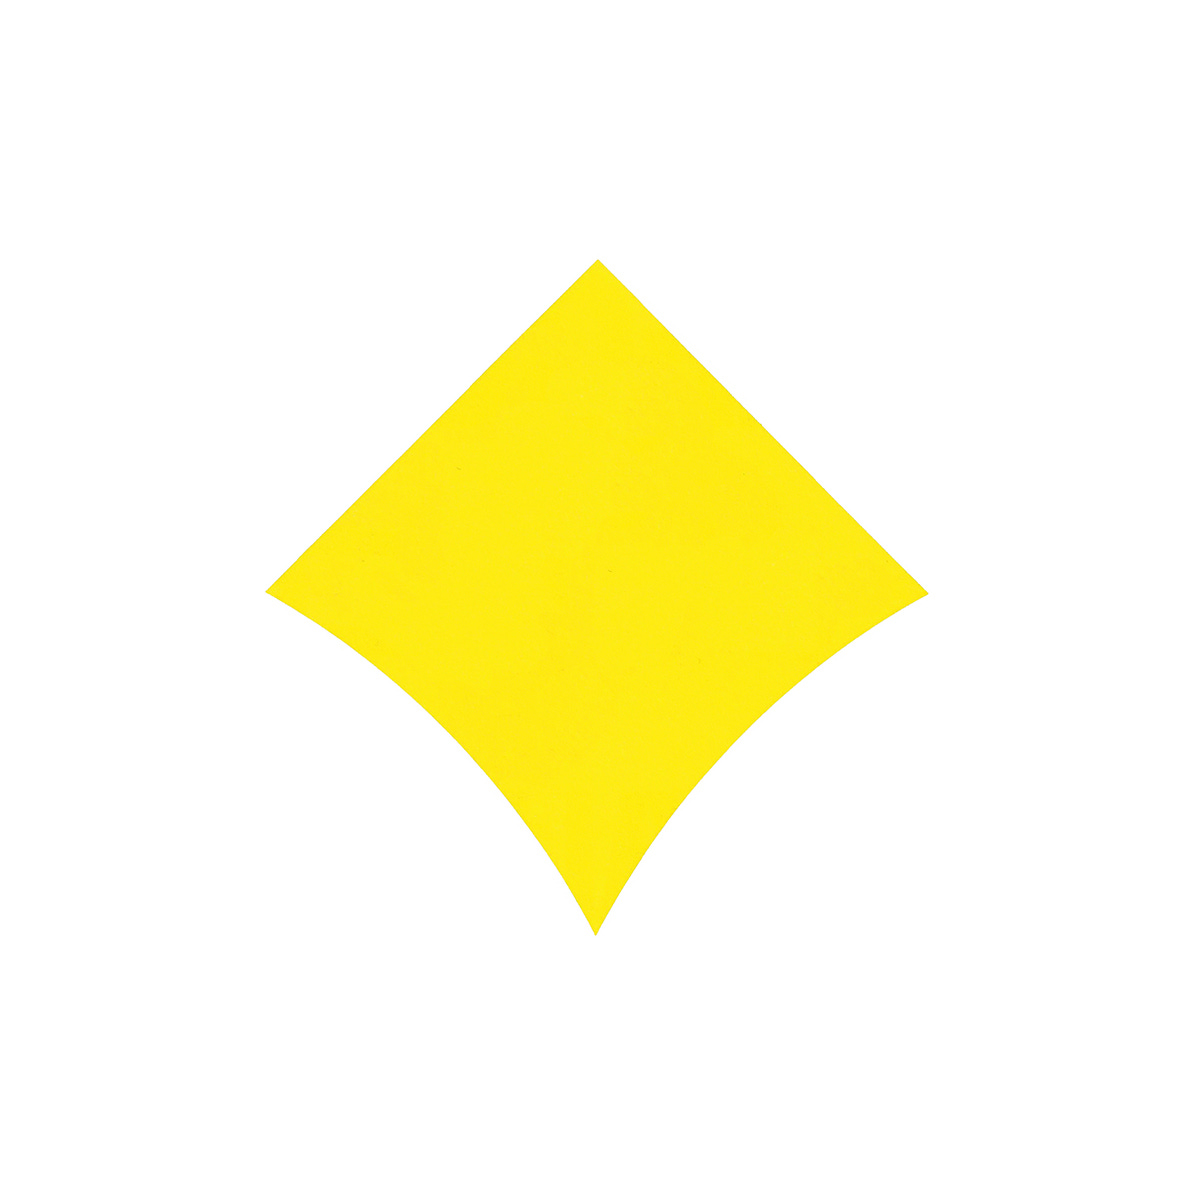 Rei Yoshimura's 1986 logo for Yokogawa